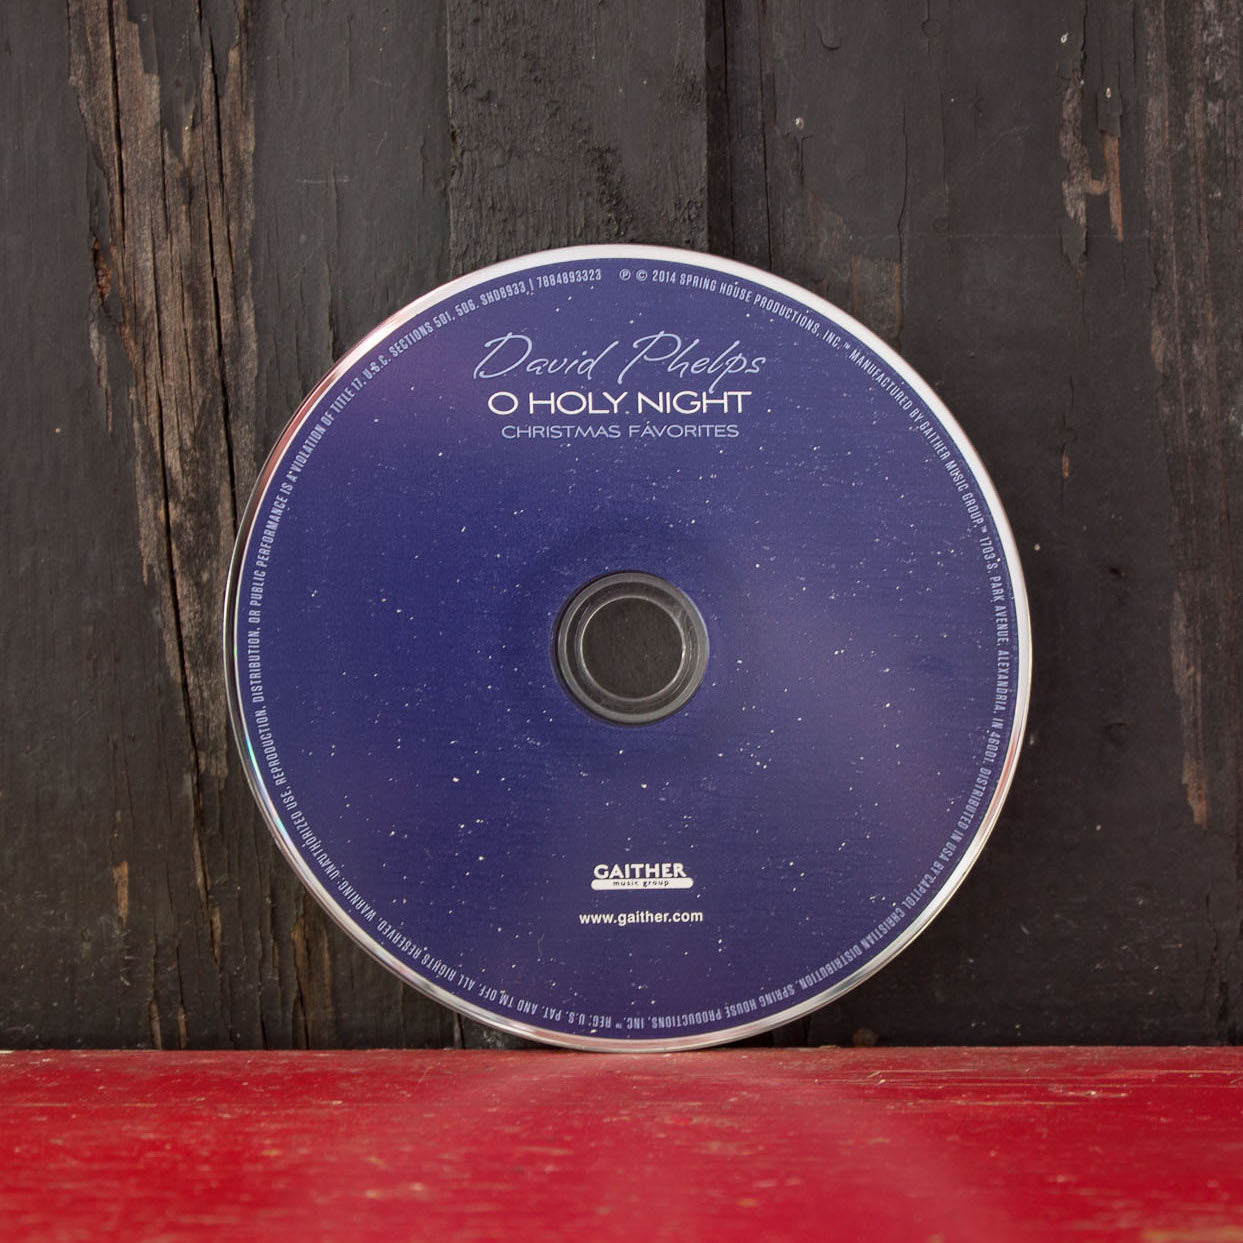 O Holy Night Cracker Barrel CD